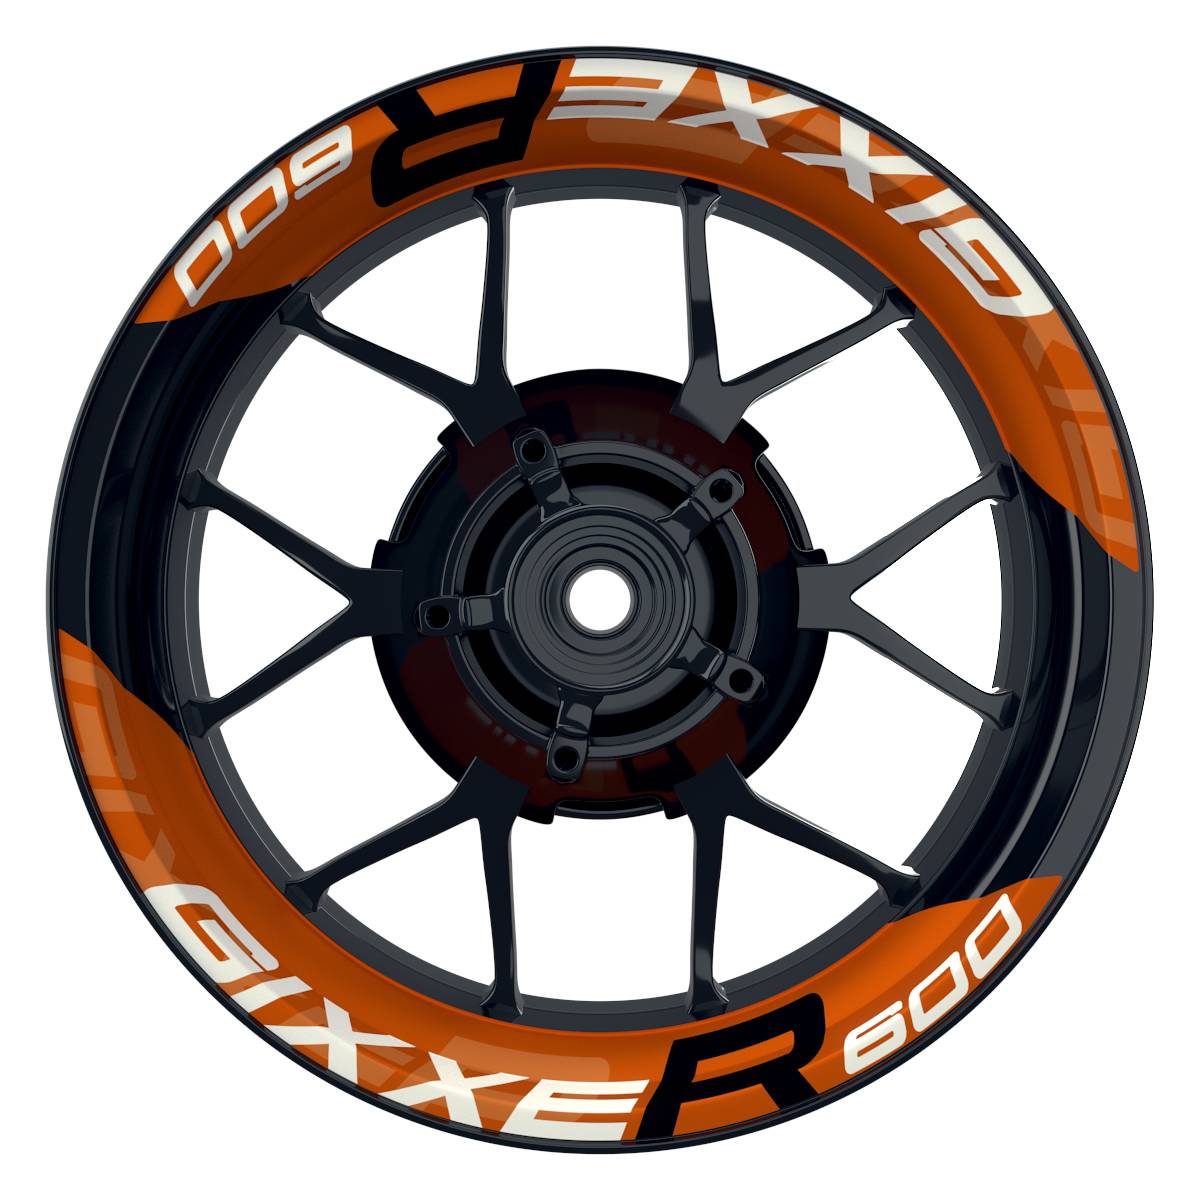 Wheelsticker Felgenaufkleber GIXXER600 einfarbig V2 orange Frontansicht